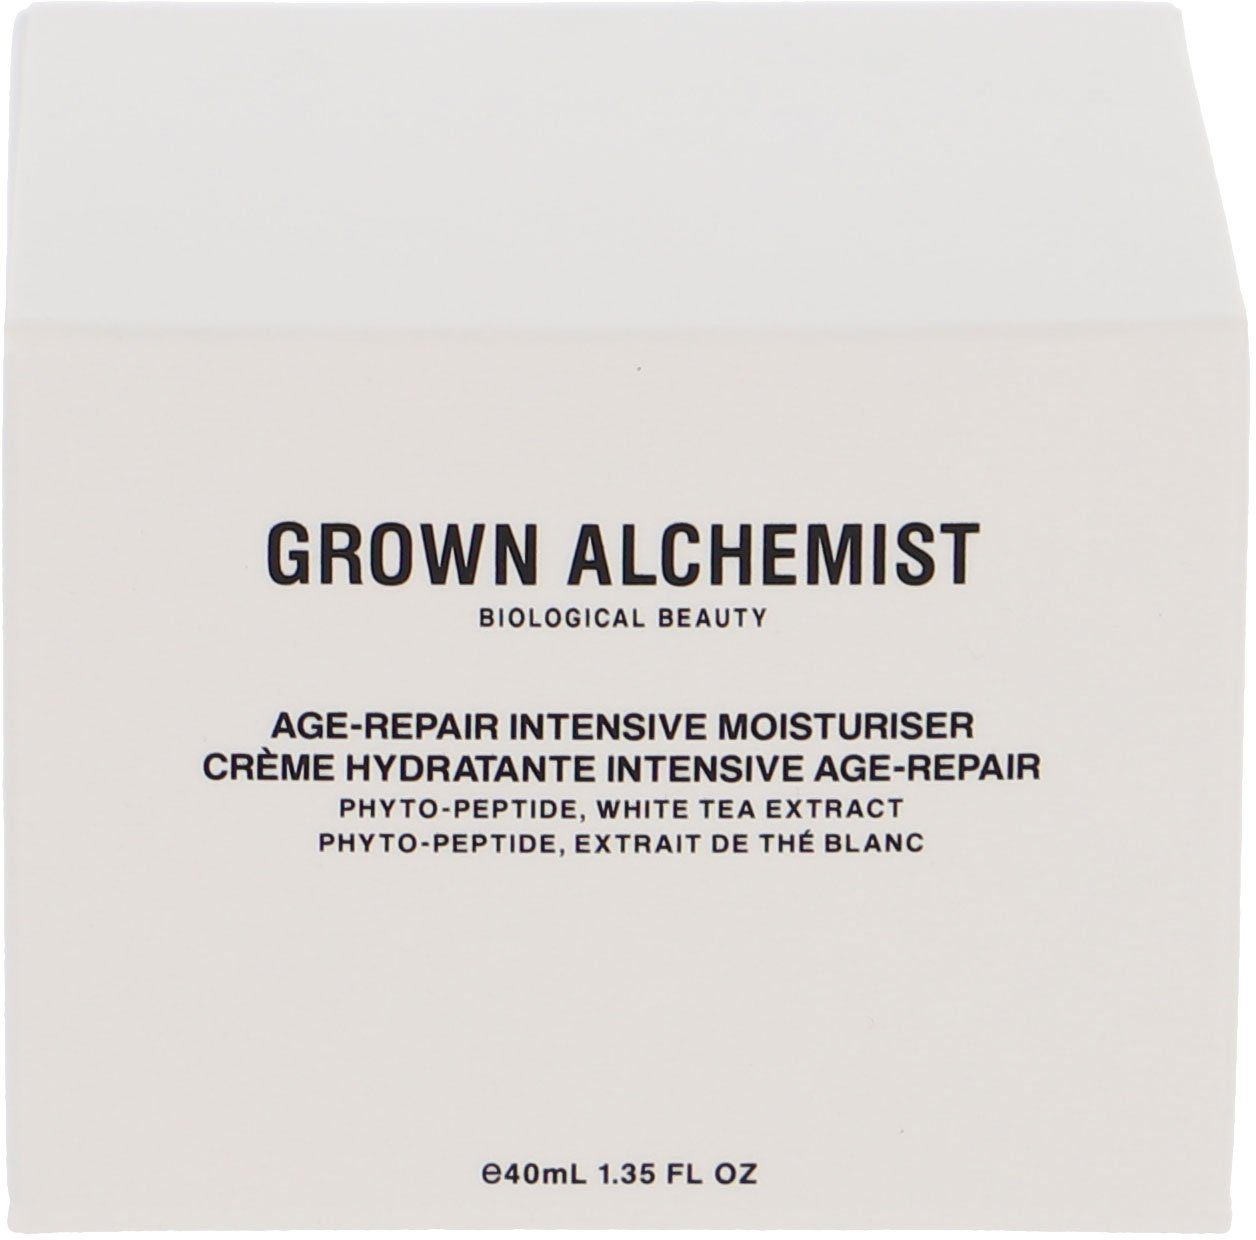 ALCHEMIST Anti-Aging-Creme Phyto-Peptide White Age-Repair Tea Extract, GROWN Moisturiser, Intensive